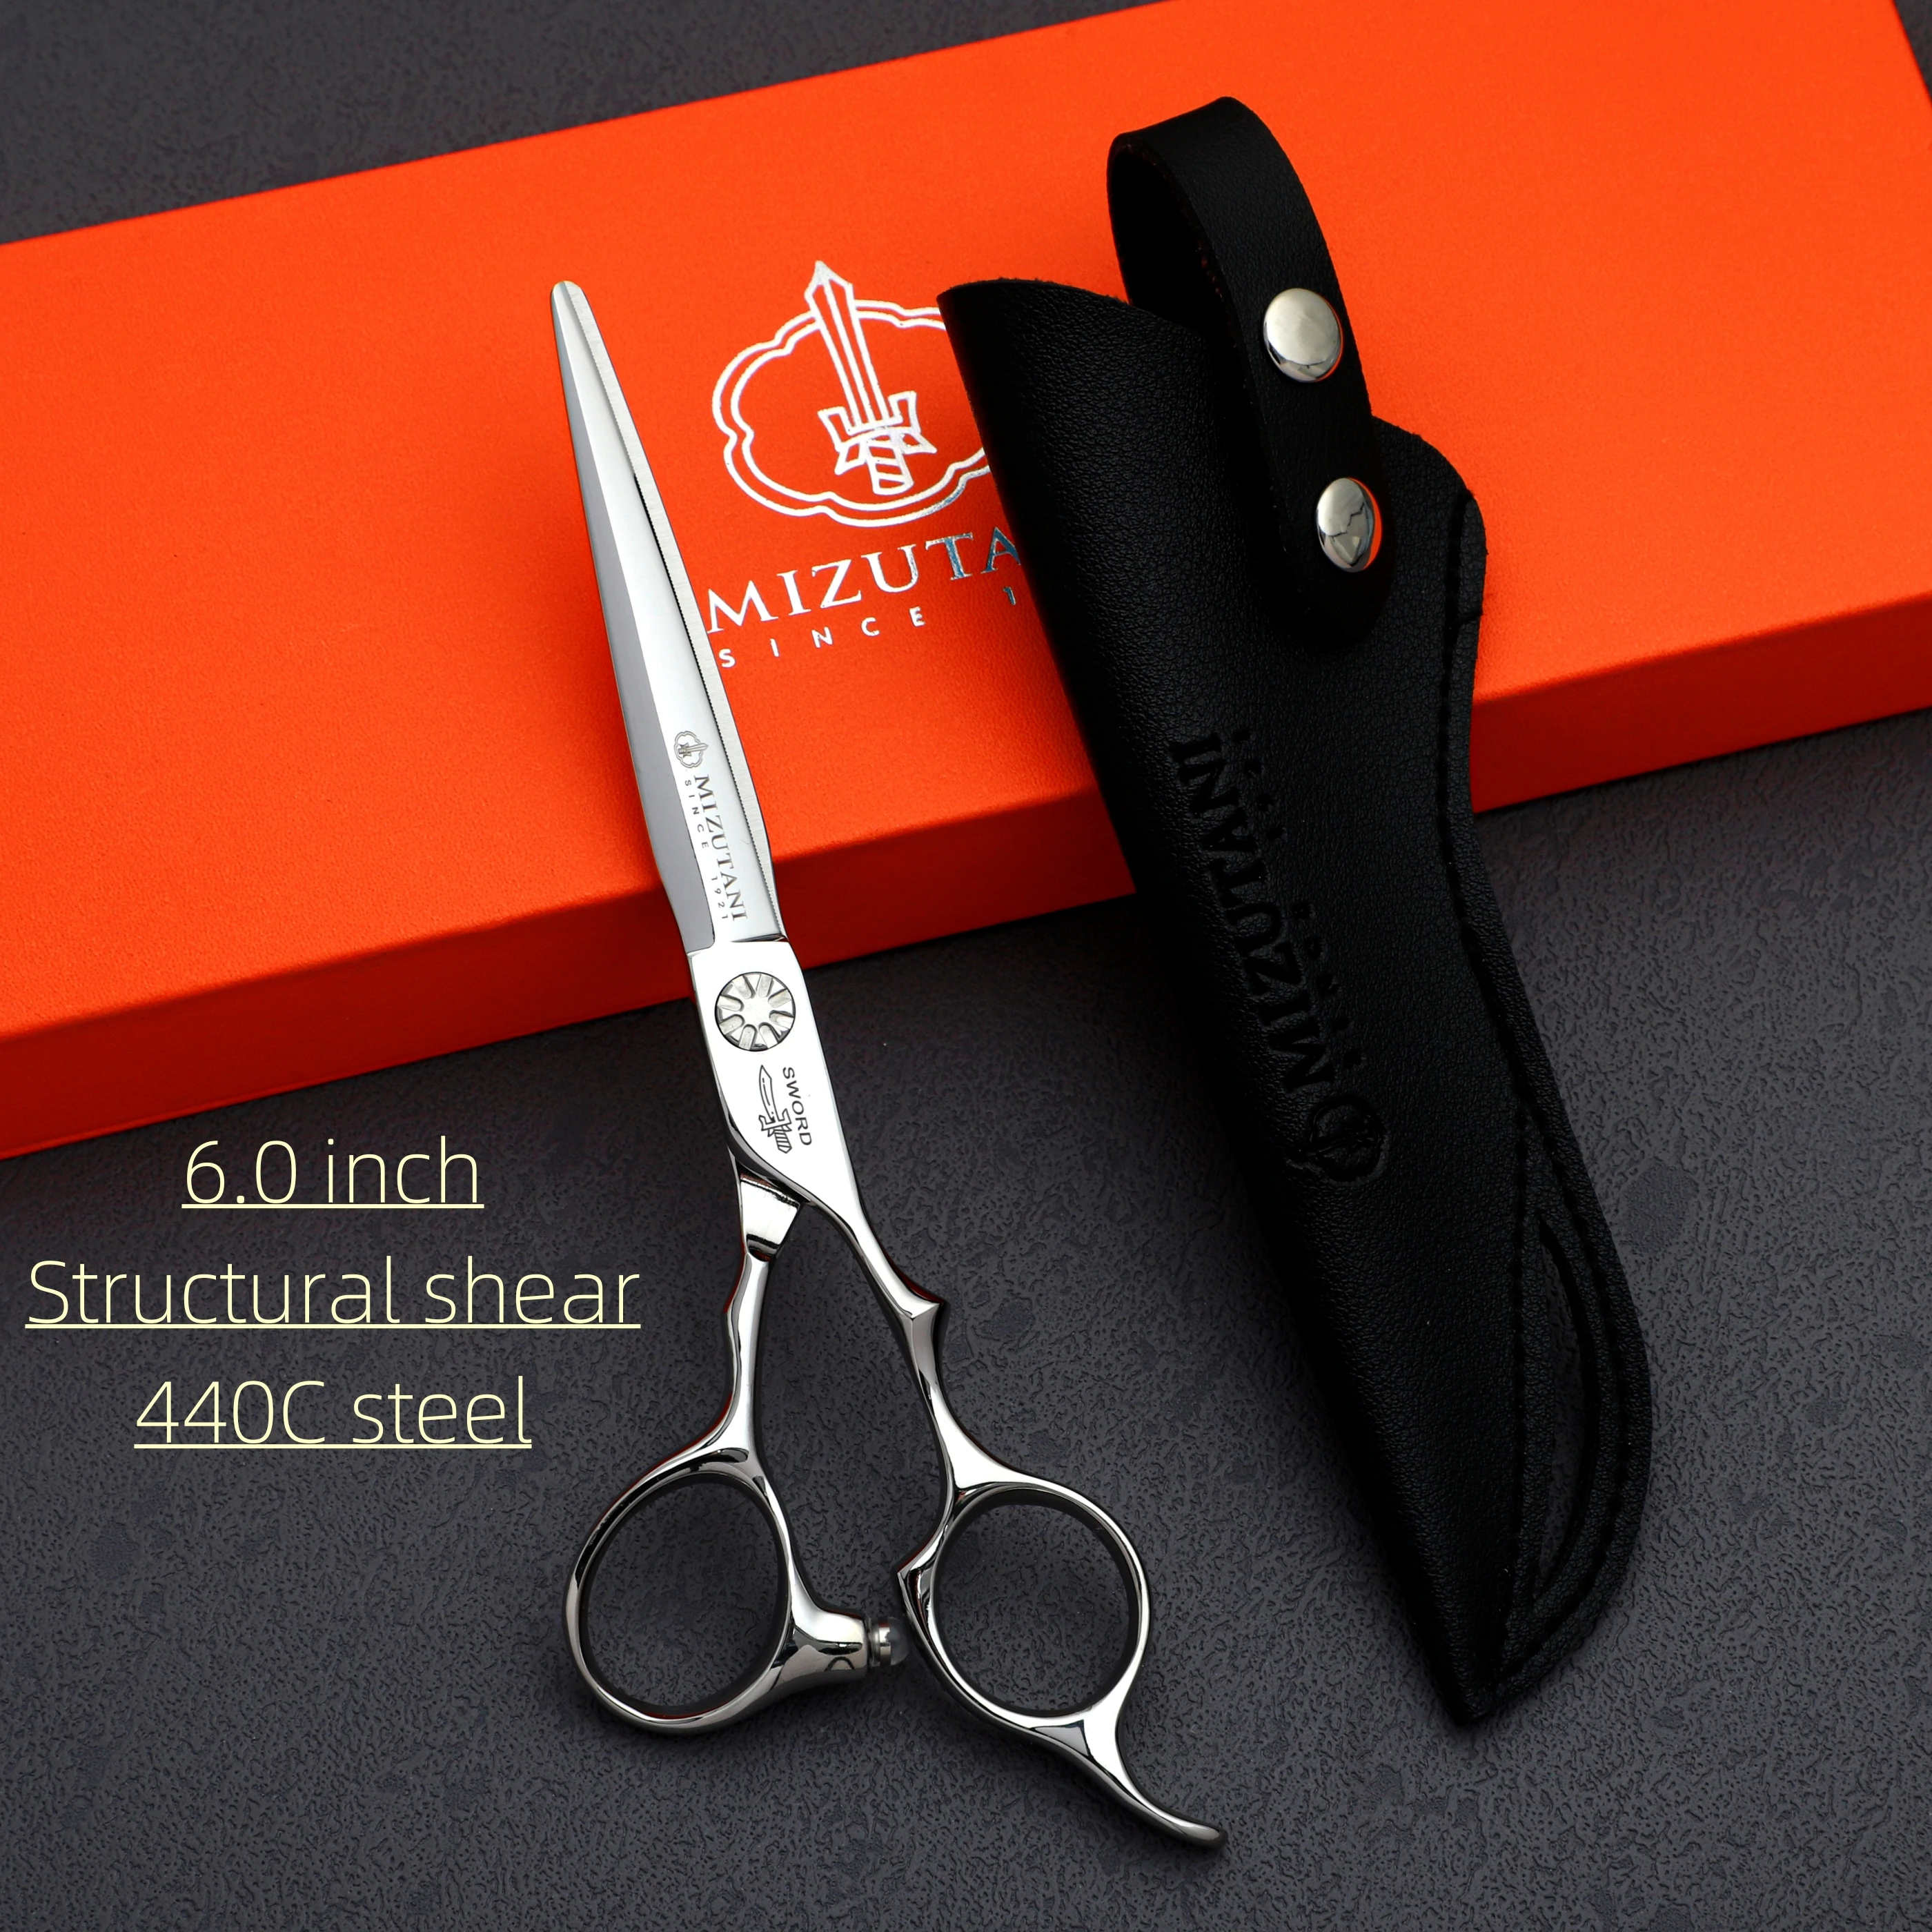 MIZUTANI Professional Hair scissors hair cutting tools 6.0 6.5 6.8 inch japan 440C steel sissors Barbershop accessories